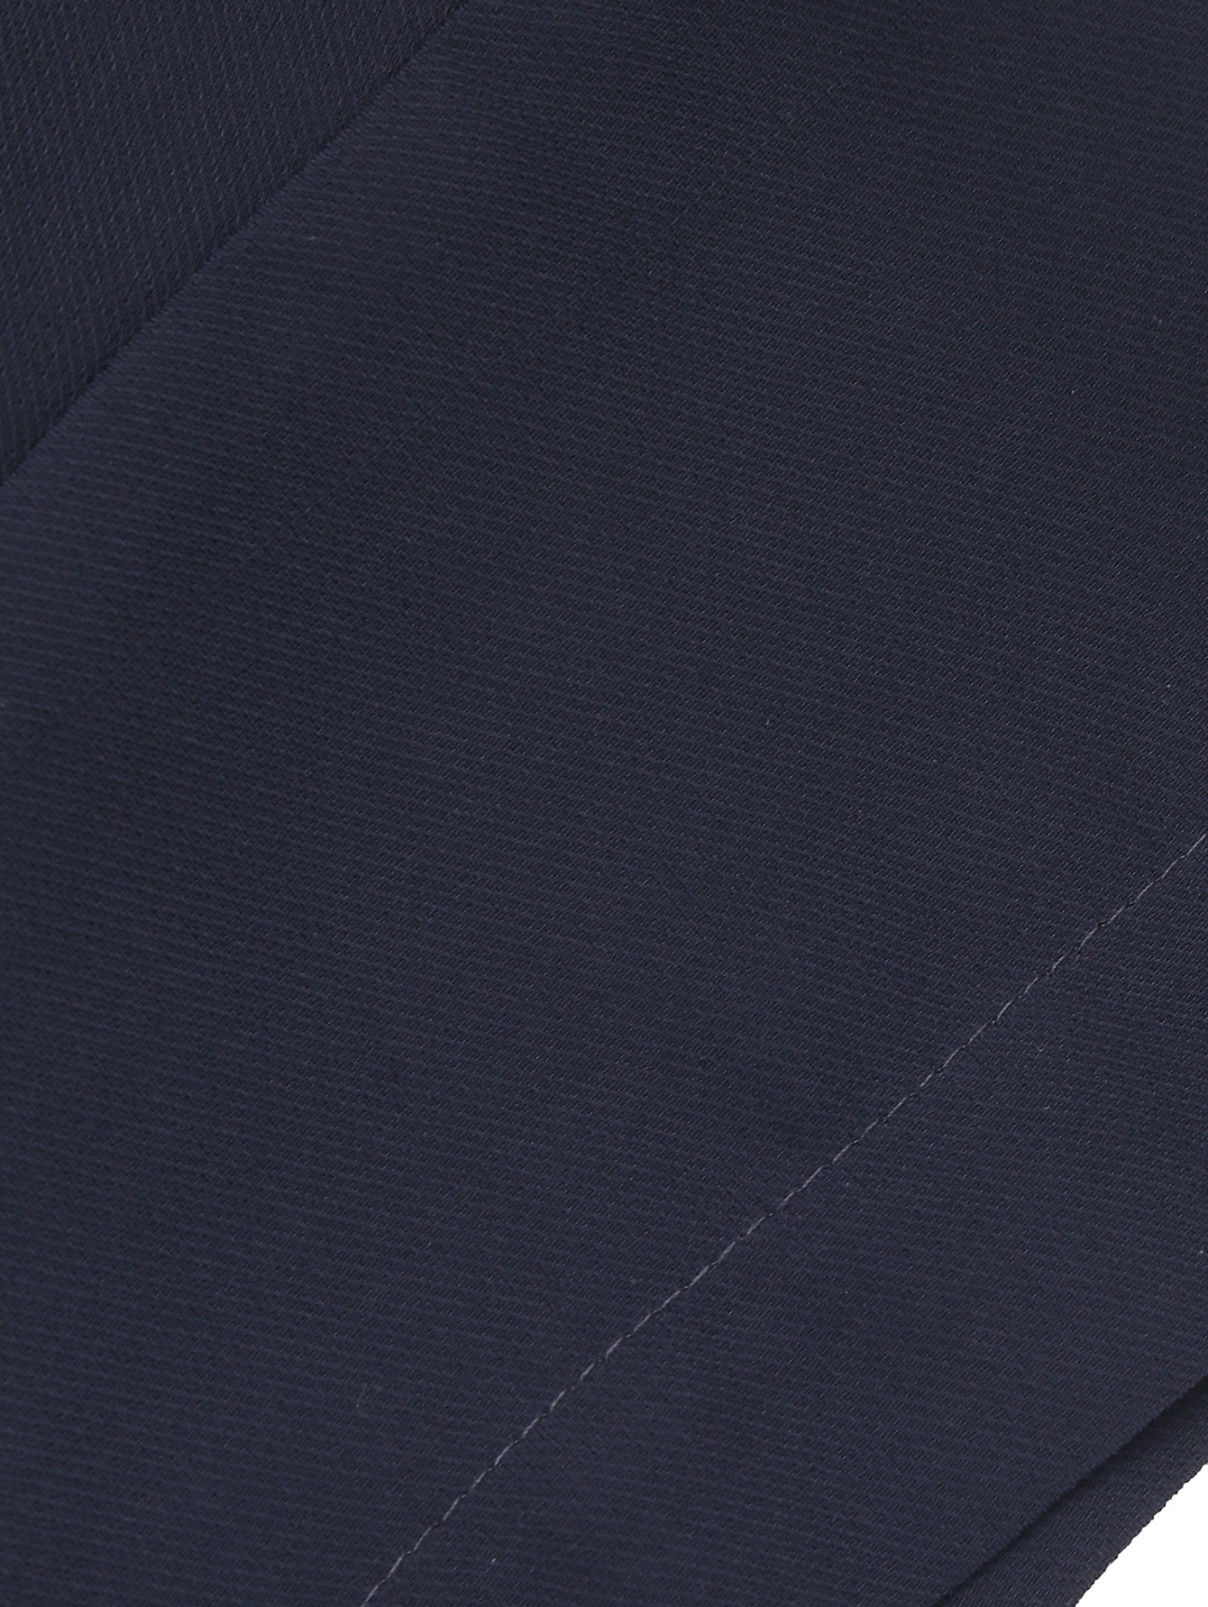 Блуза с коротким рукавом SILVIAN HEACH  –  Деталь1  – Цвет:  Синий